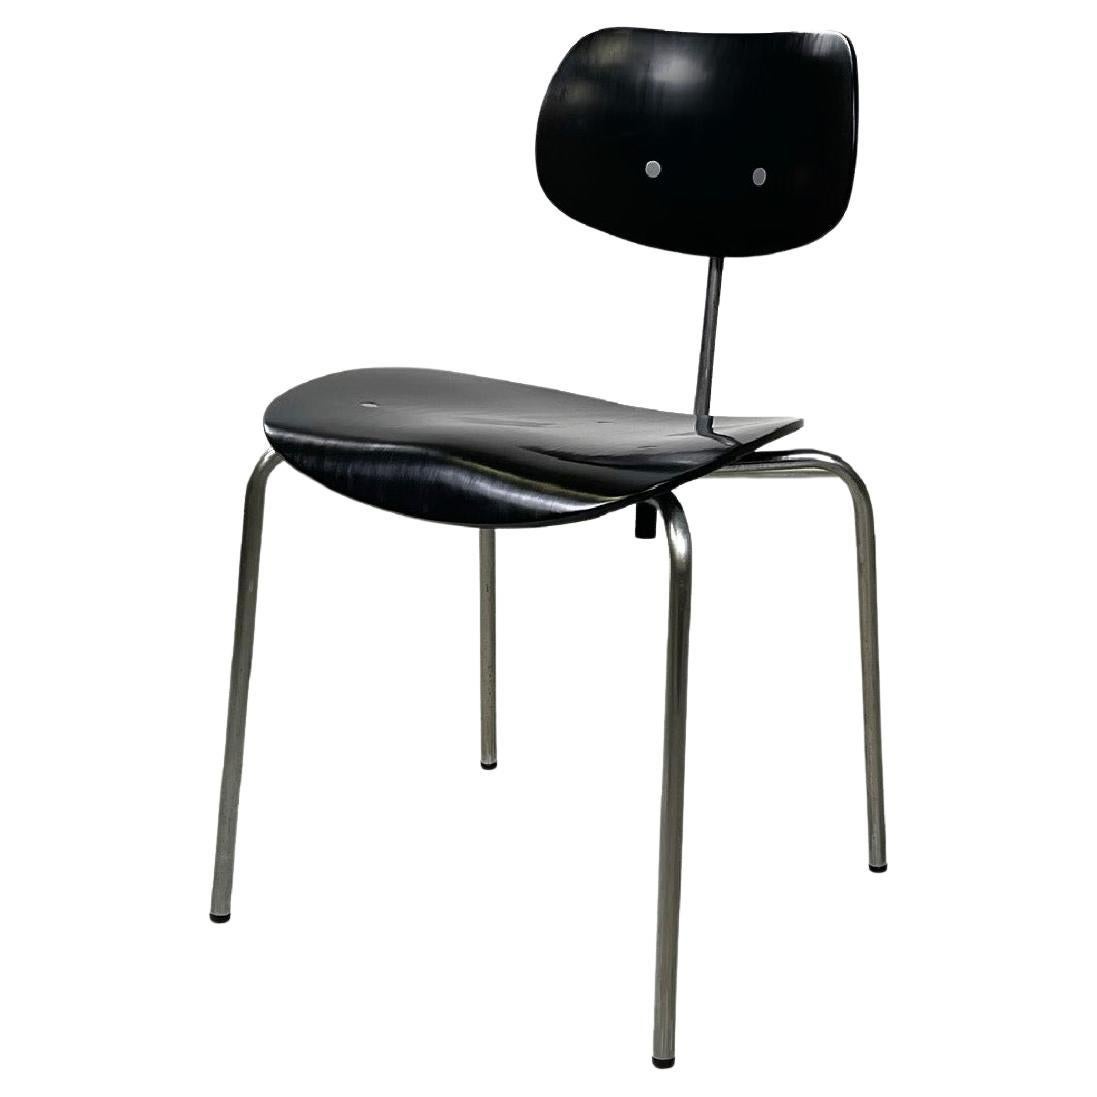 German mid-century modern chair SE 68 by Egon Eiermann for Wilde + Spieth, 1950s